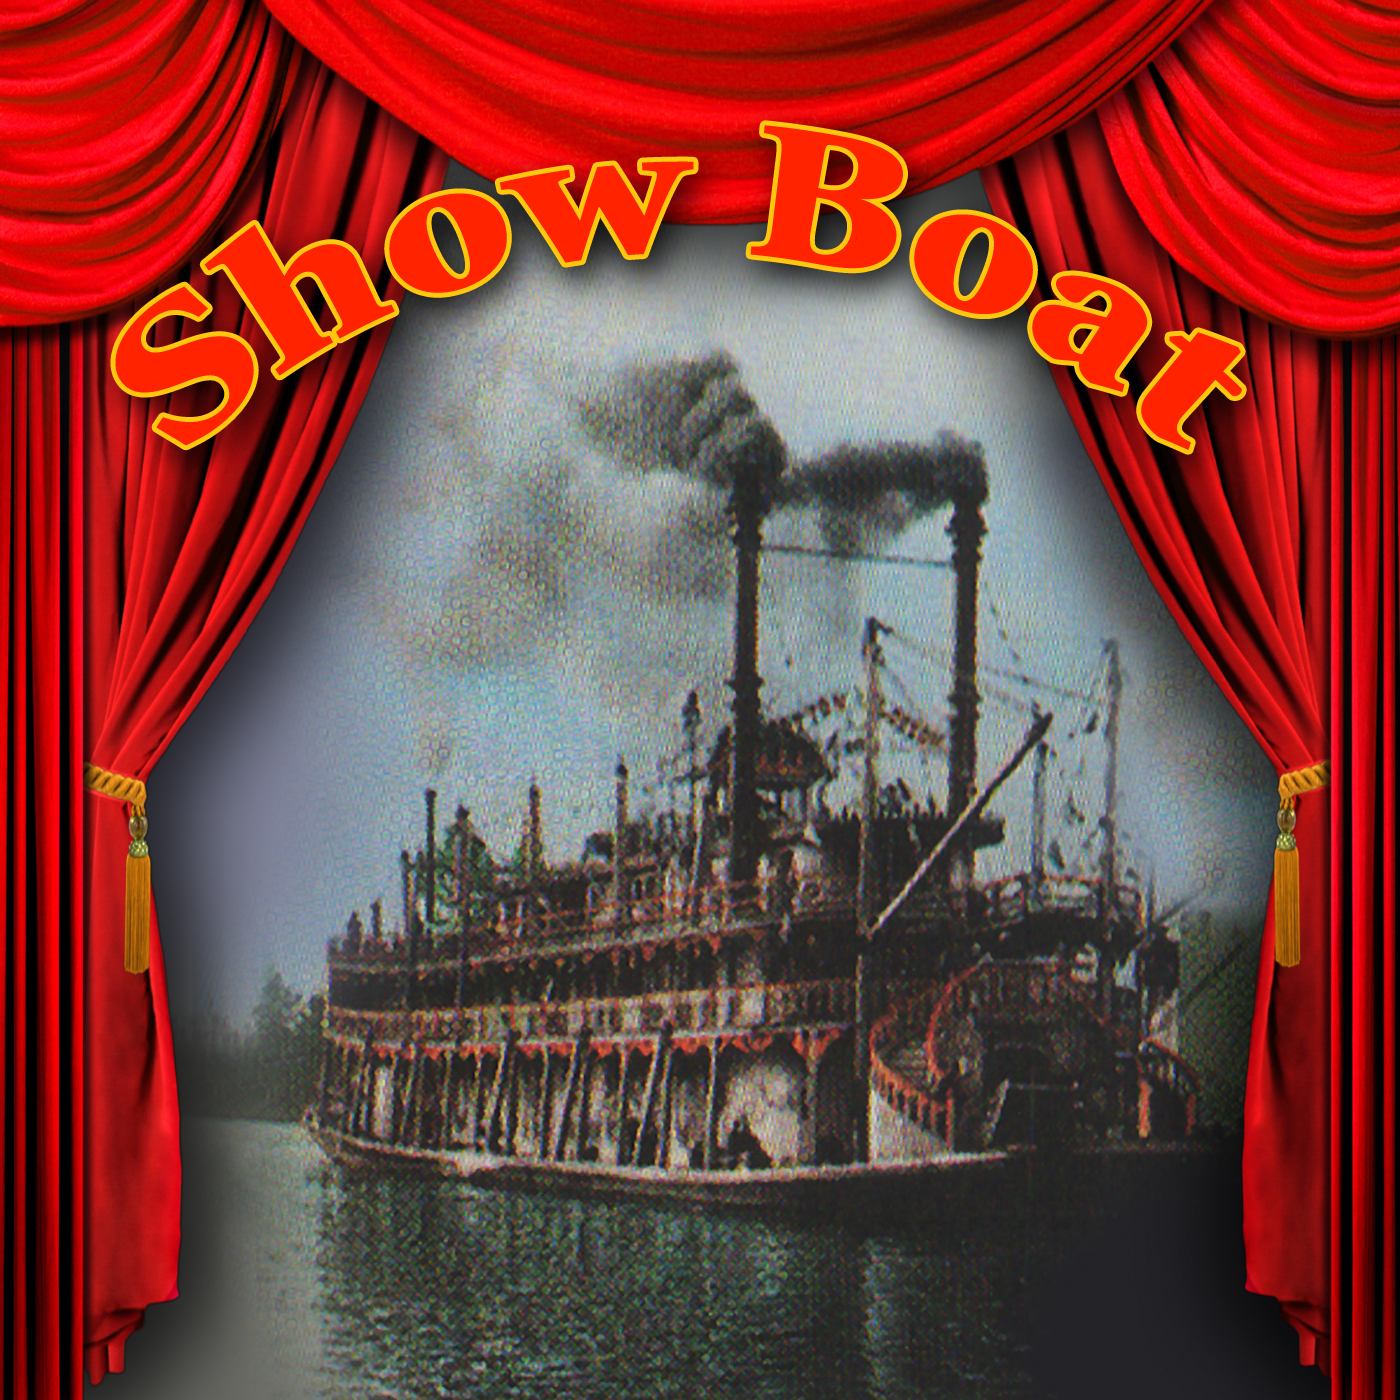 Showboat (Main Title)